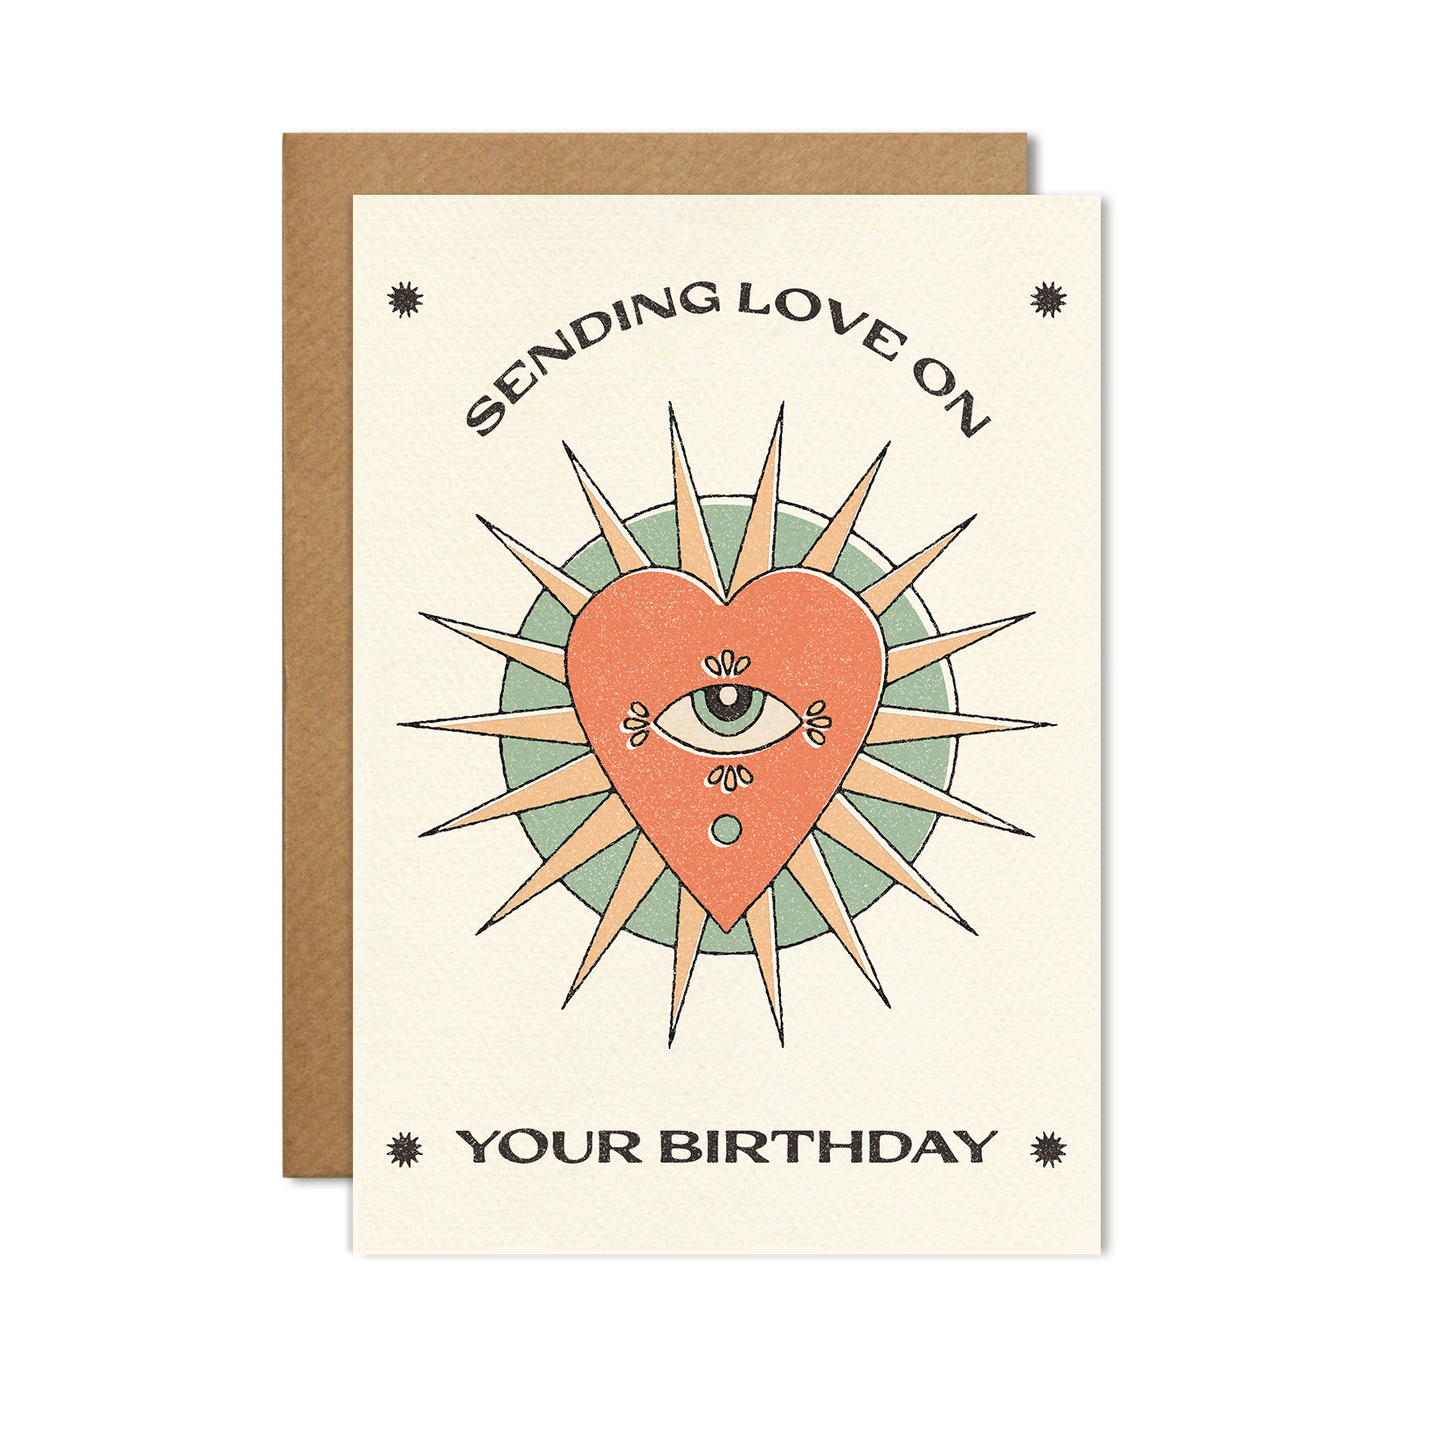 Sending Love on Your Birthday Card